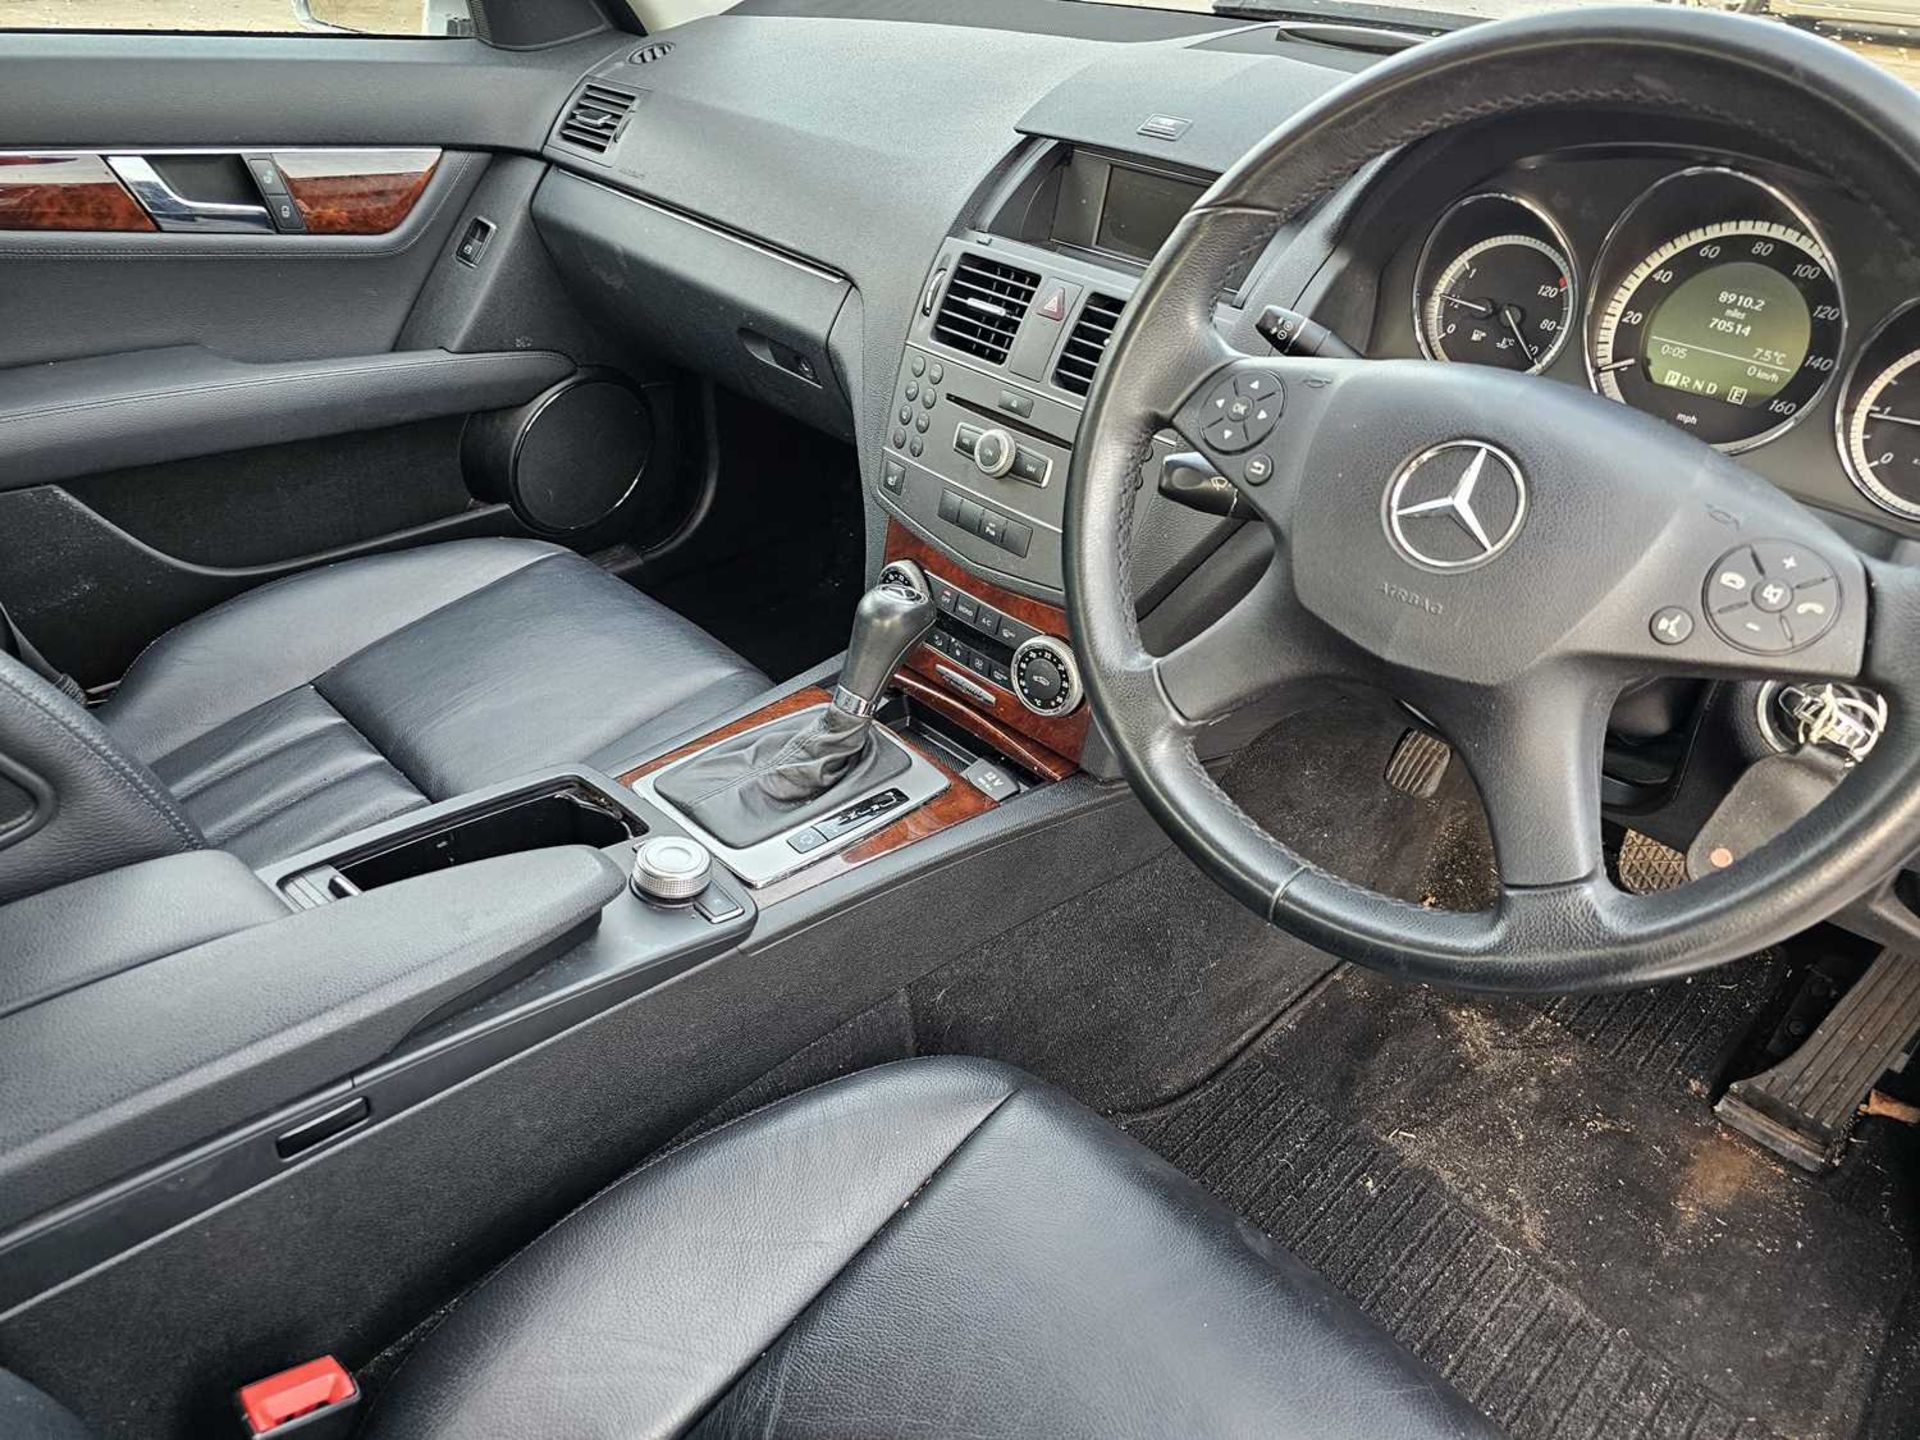 2011 Mercedes C250 Avantgarde CDi, Auto, Parking Sensors, Full Leather, Heated Electric Seats, Bluet - Image 26 of 28